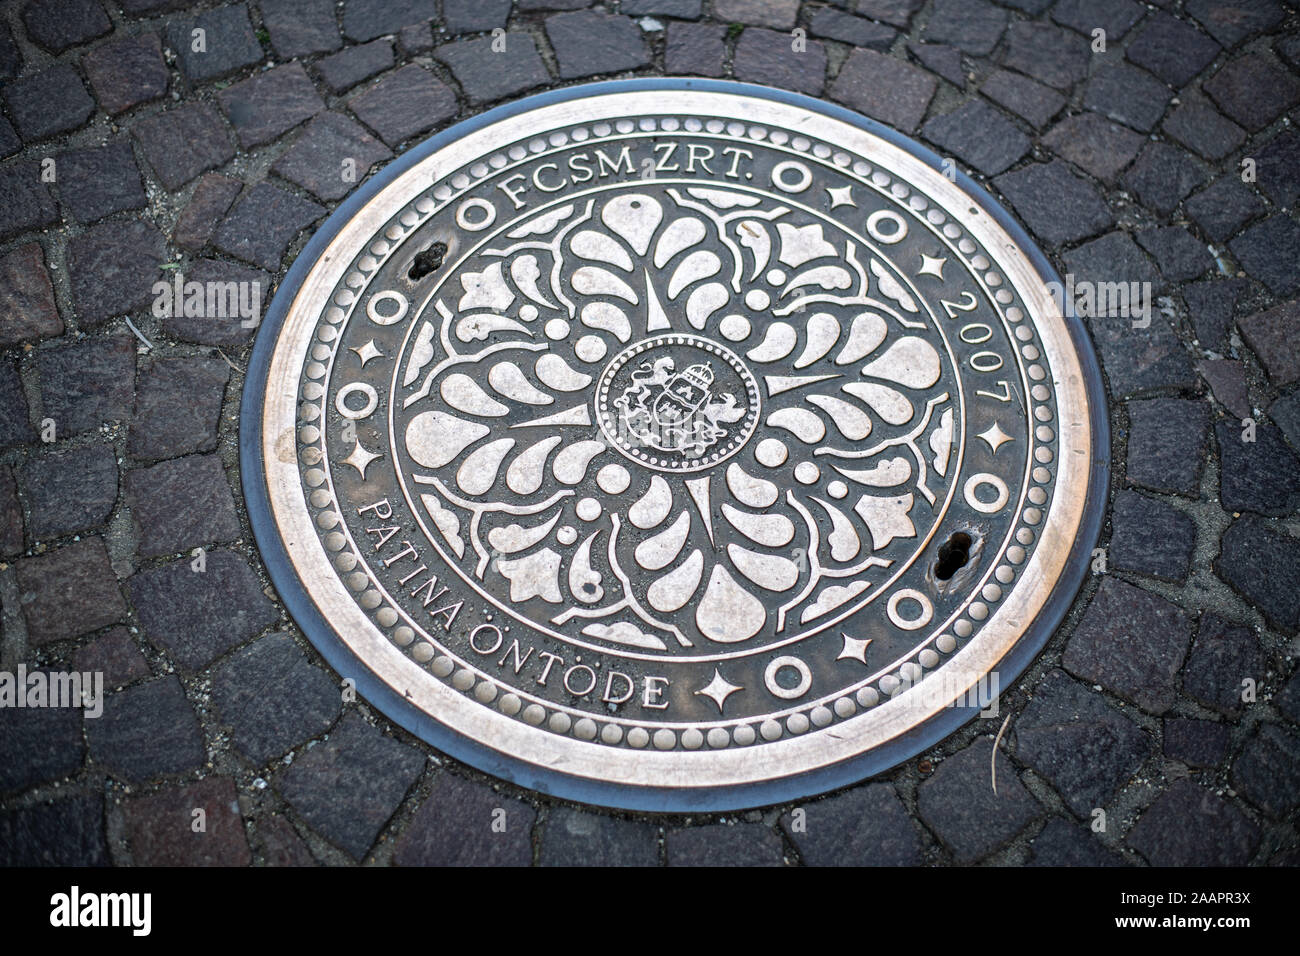 A decorative manhole cover, Budapest, Hungary Stock Photo